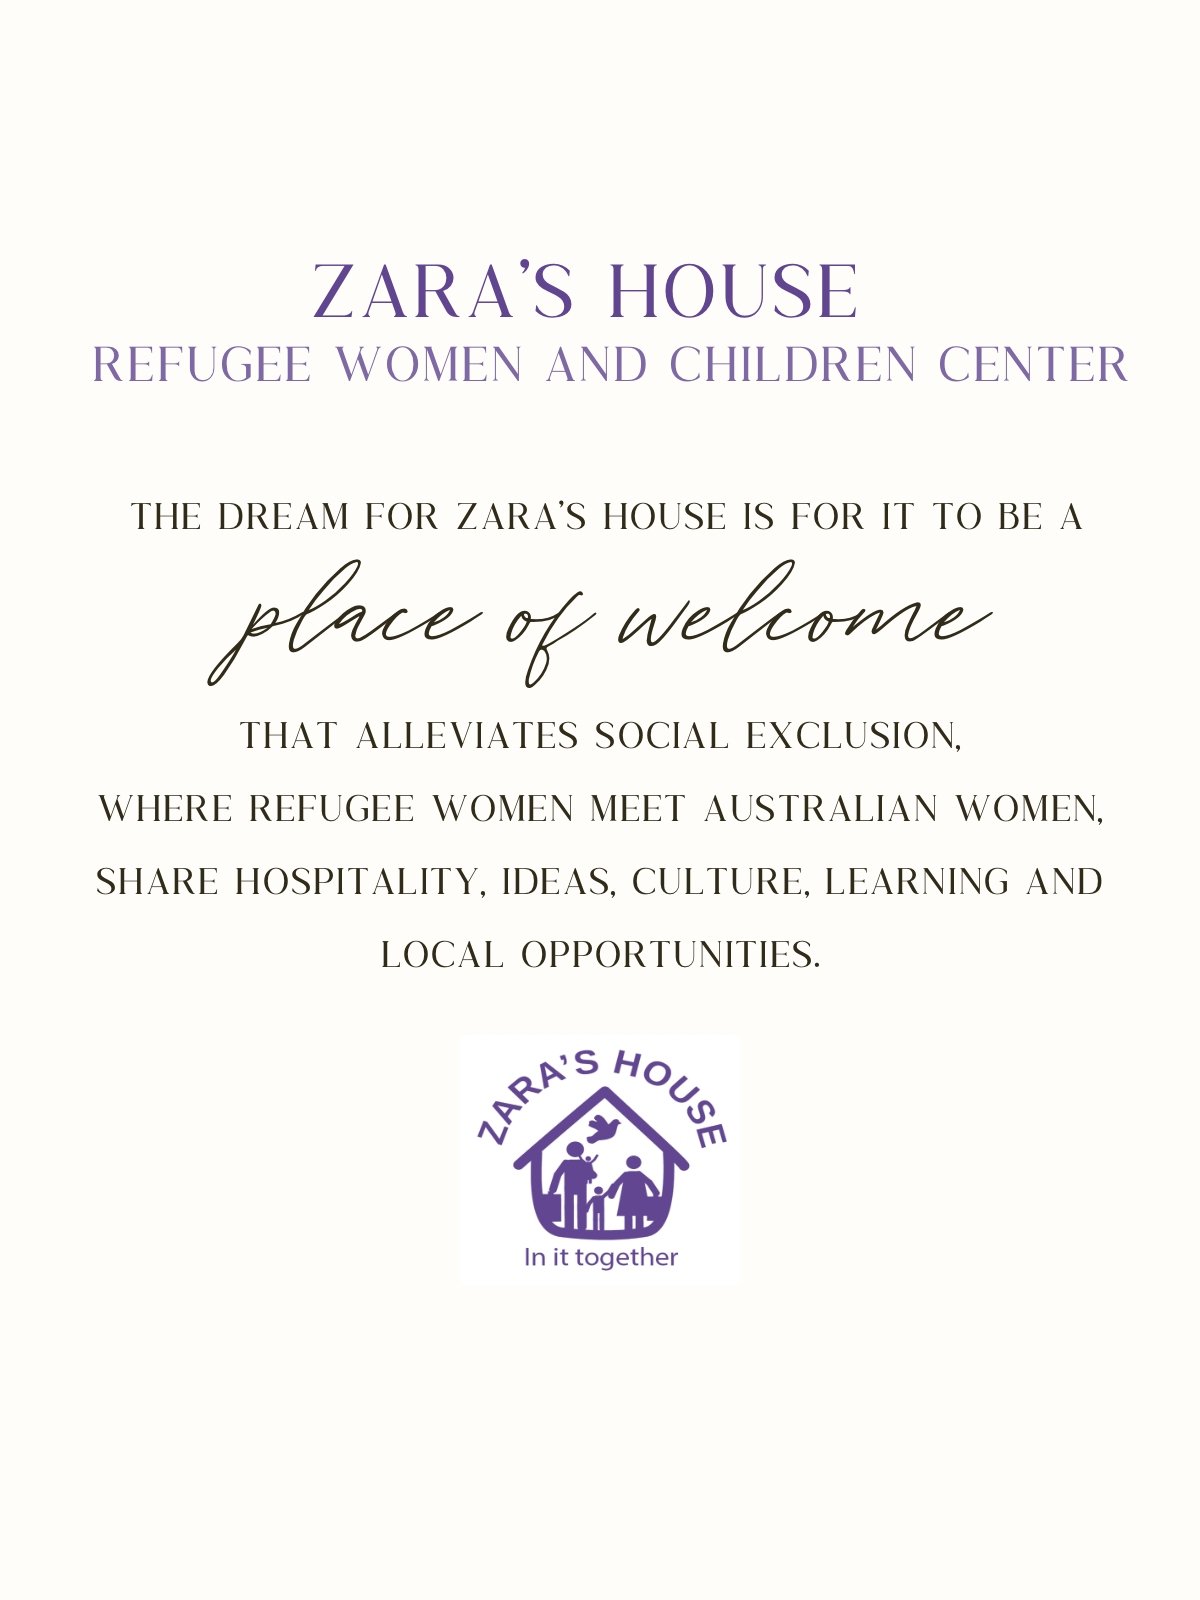 International Women's Day Fundraiser for Zara's House #embraceequity